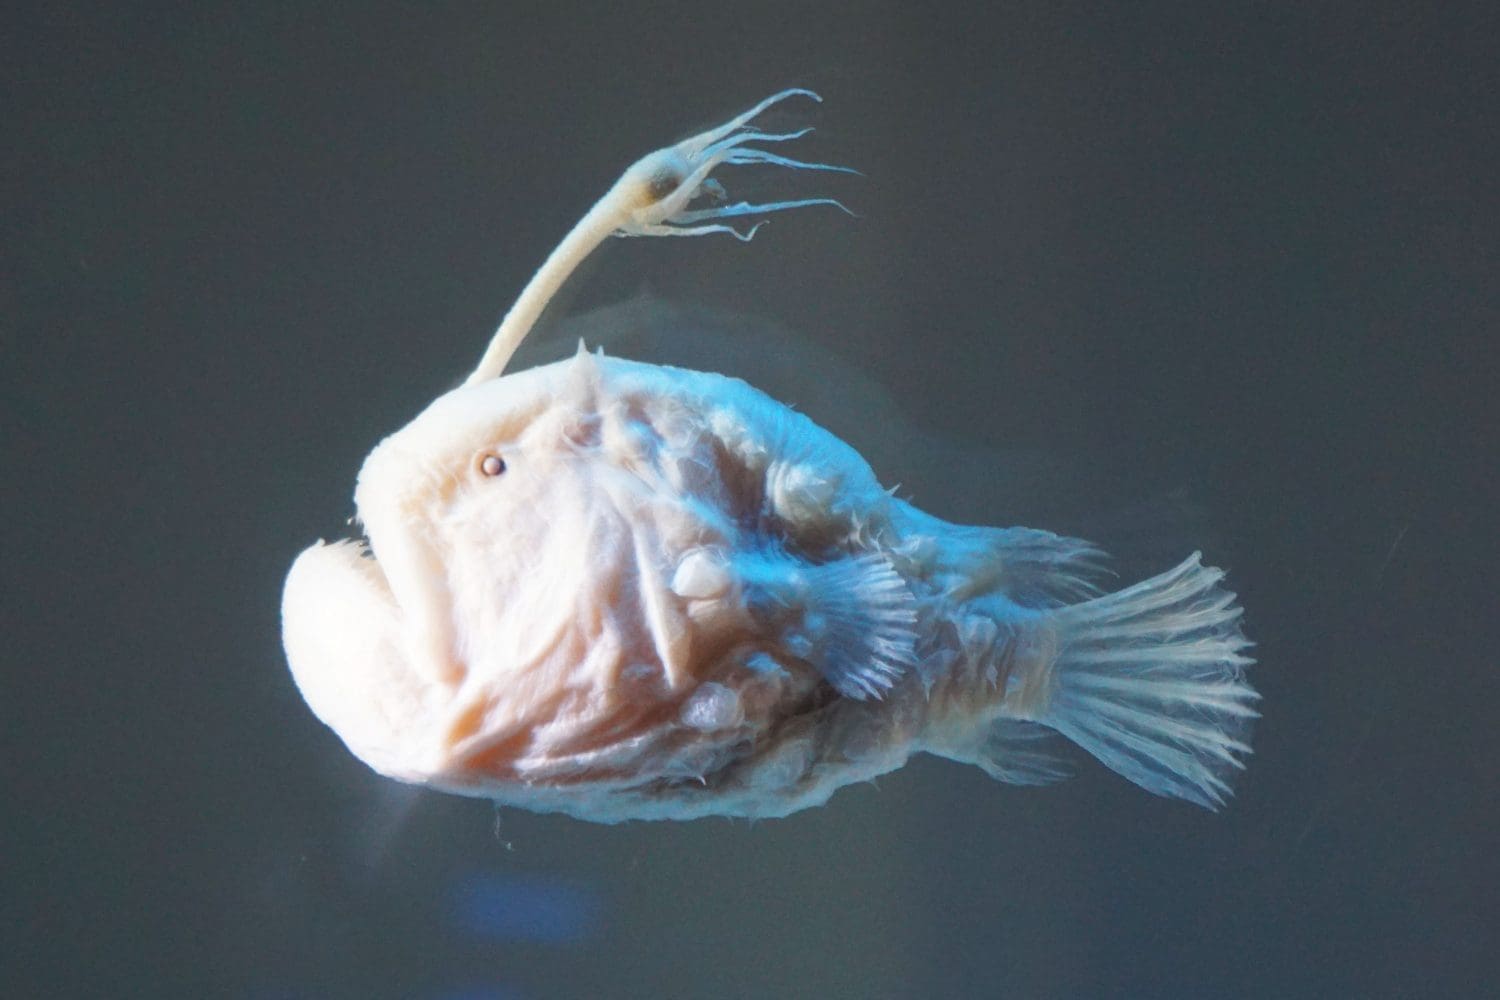 Preserved deep sea fish called Anglerfish